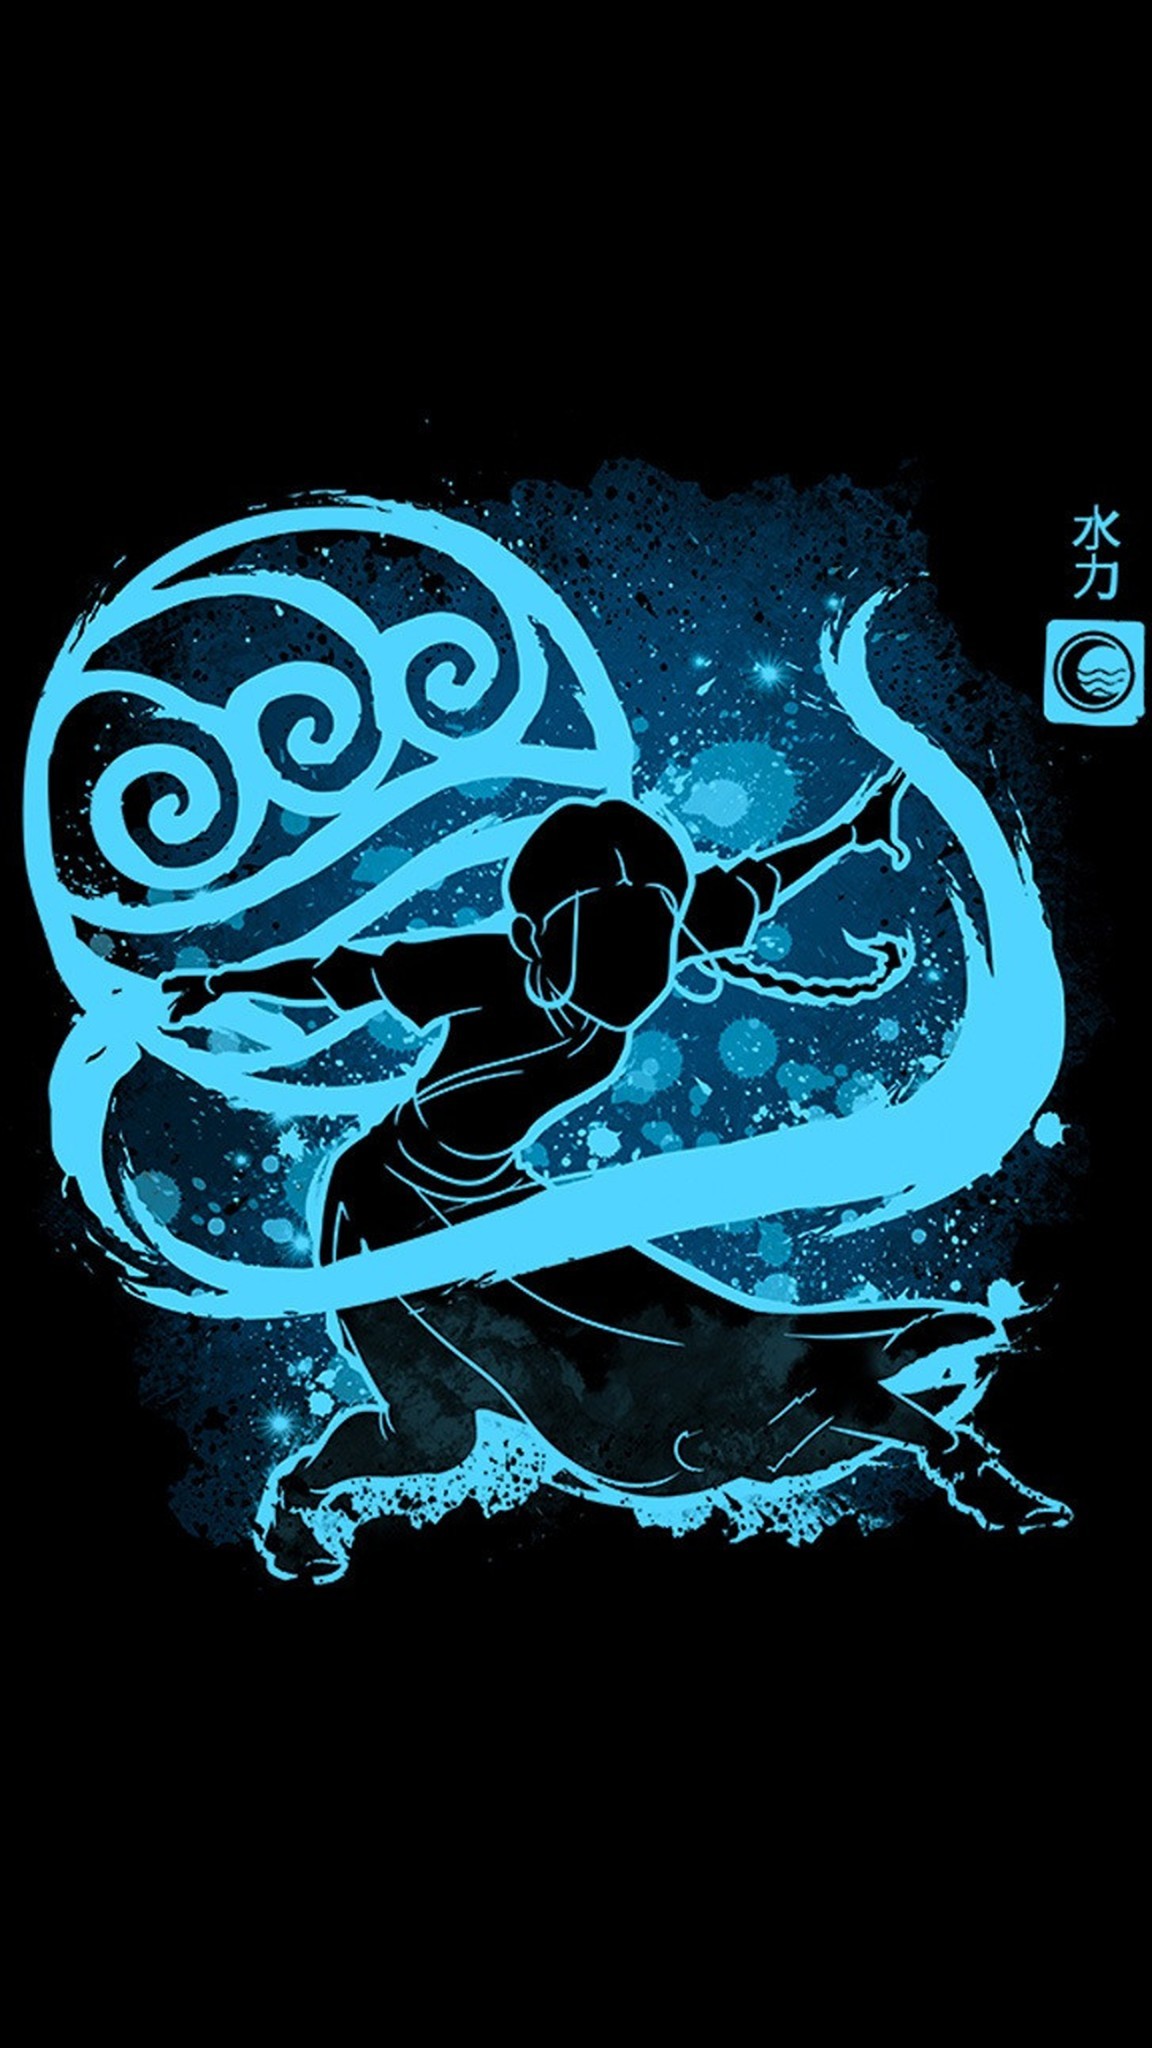 Avatar The Last Airbender Zuko And Katara HD Anime Wallpapers | HD  Wallpapers | ID #36962